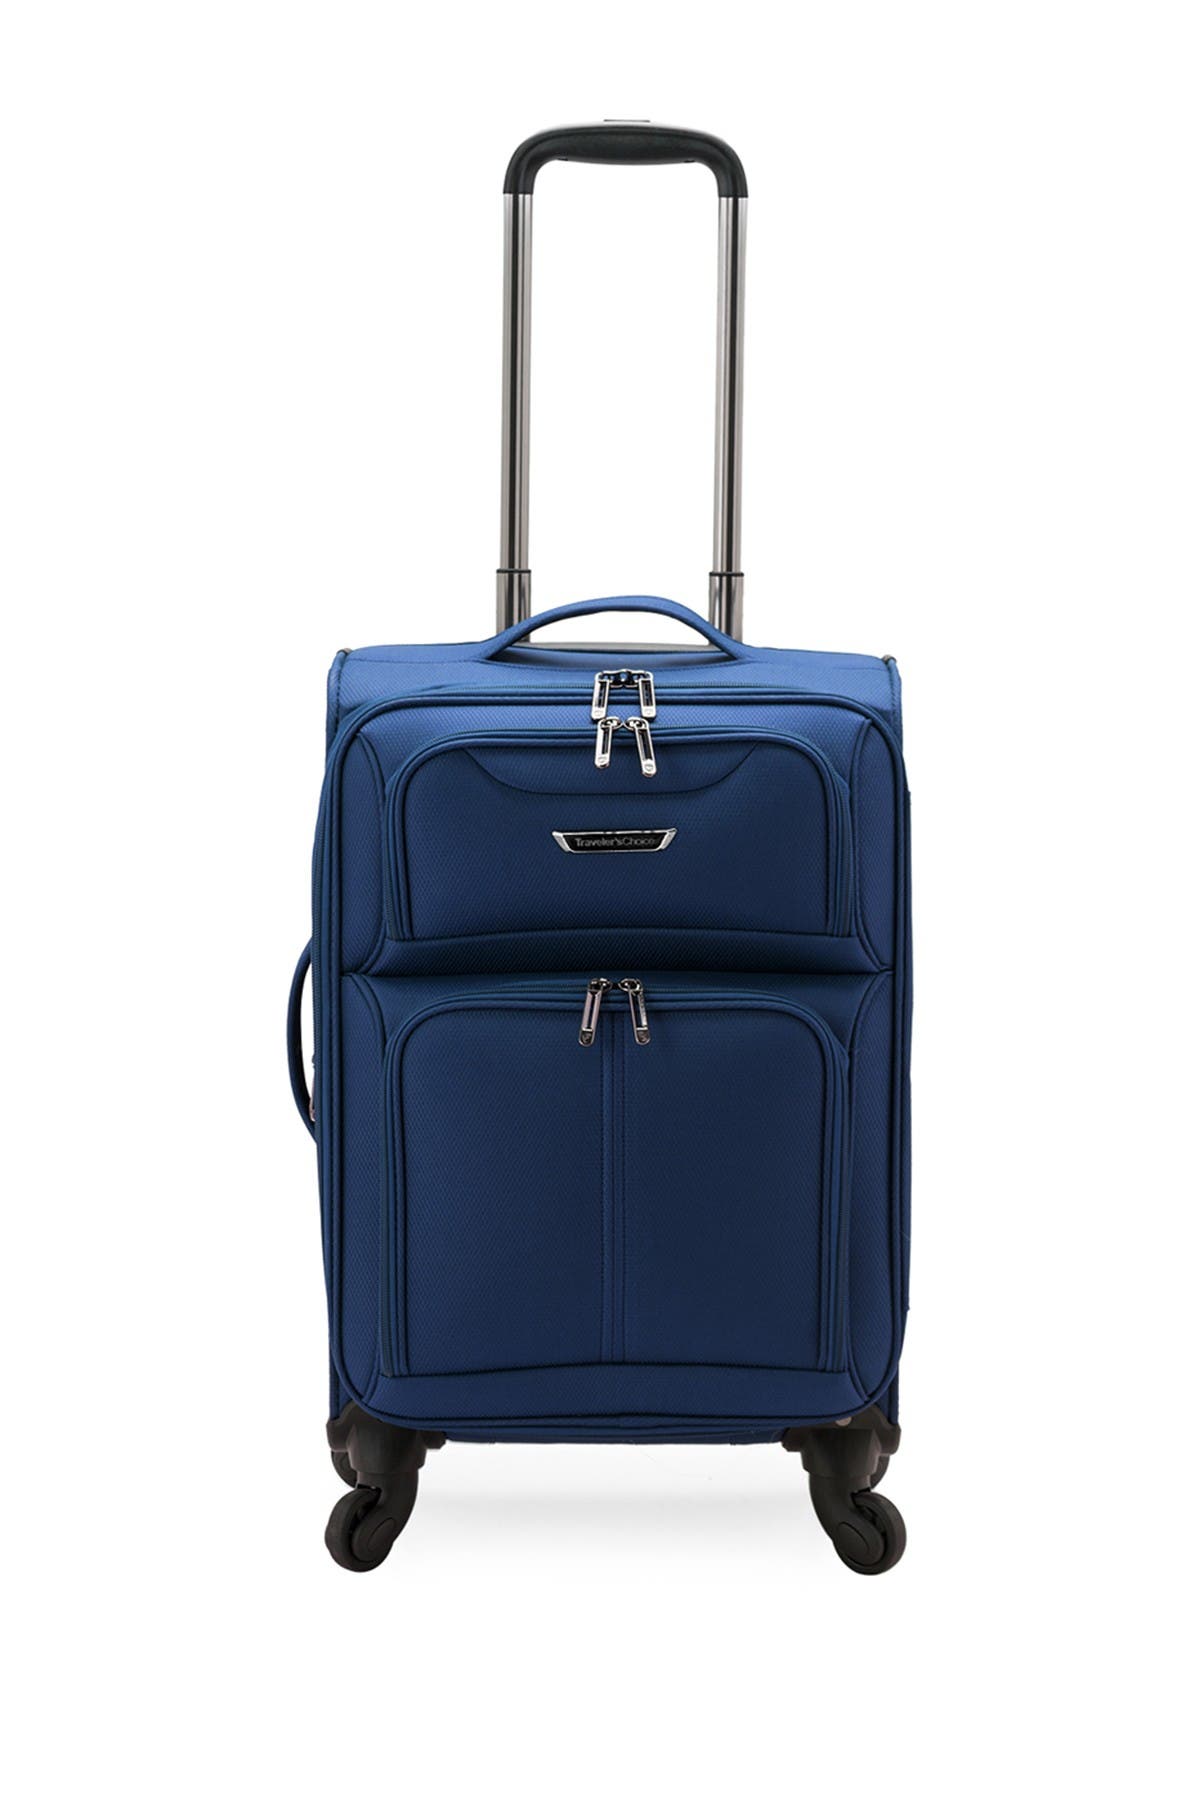 Traveler's Choice Luggage | Cedar 22